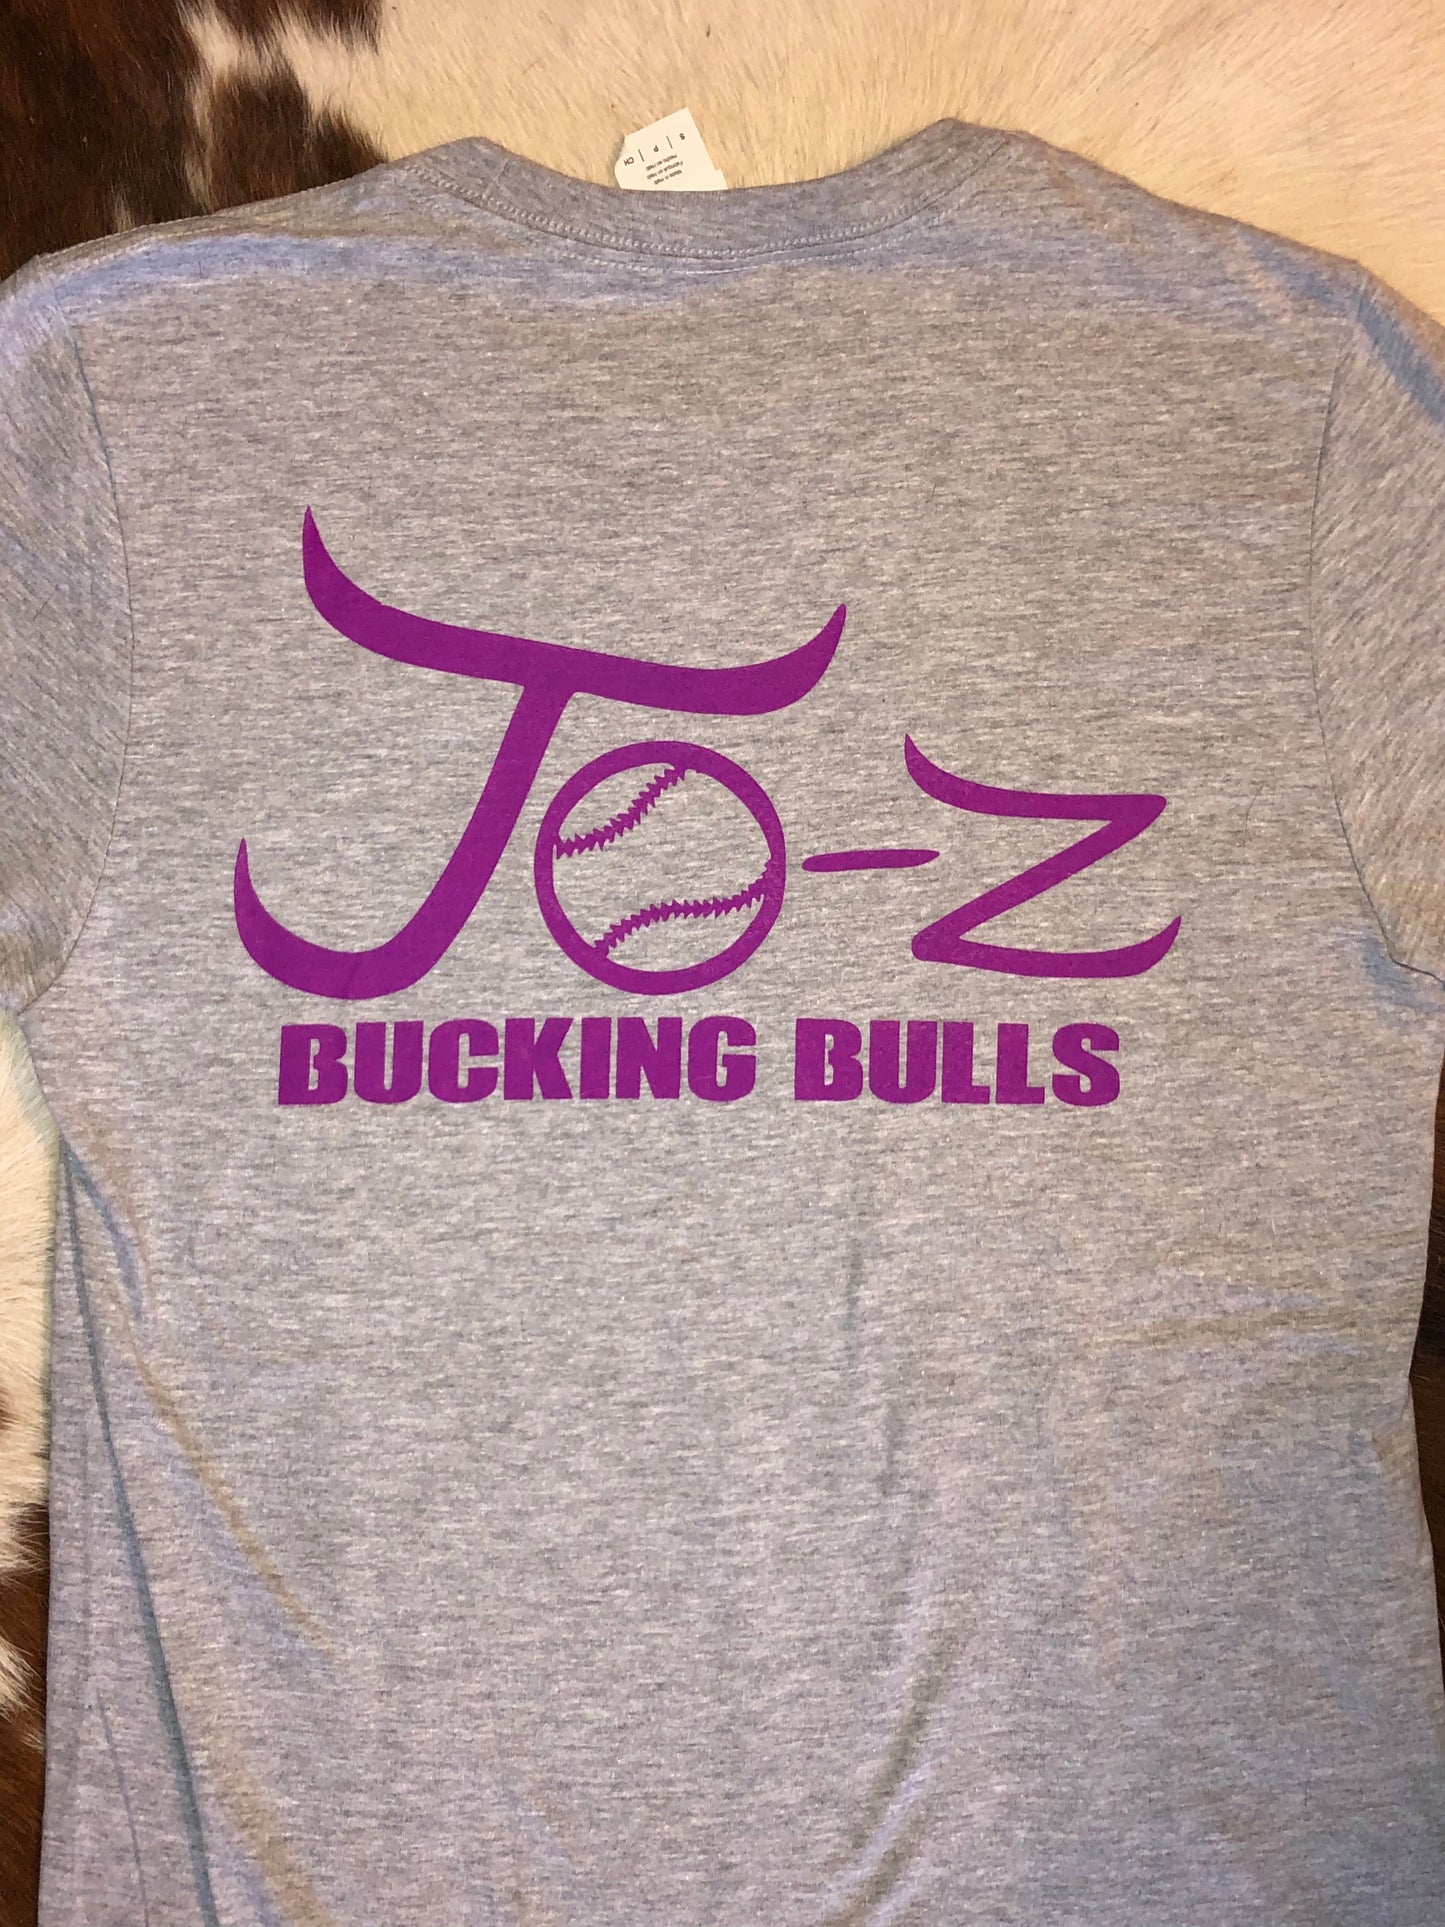 Jo-z Bucking Bulls